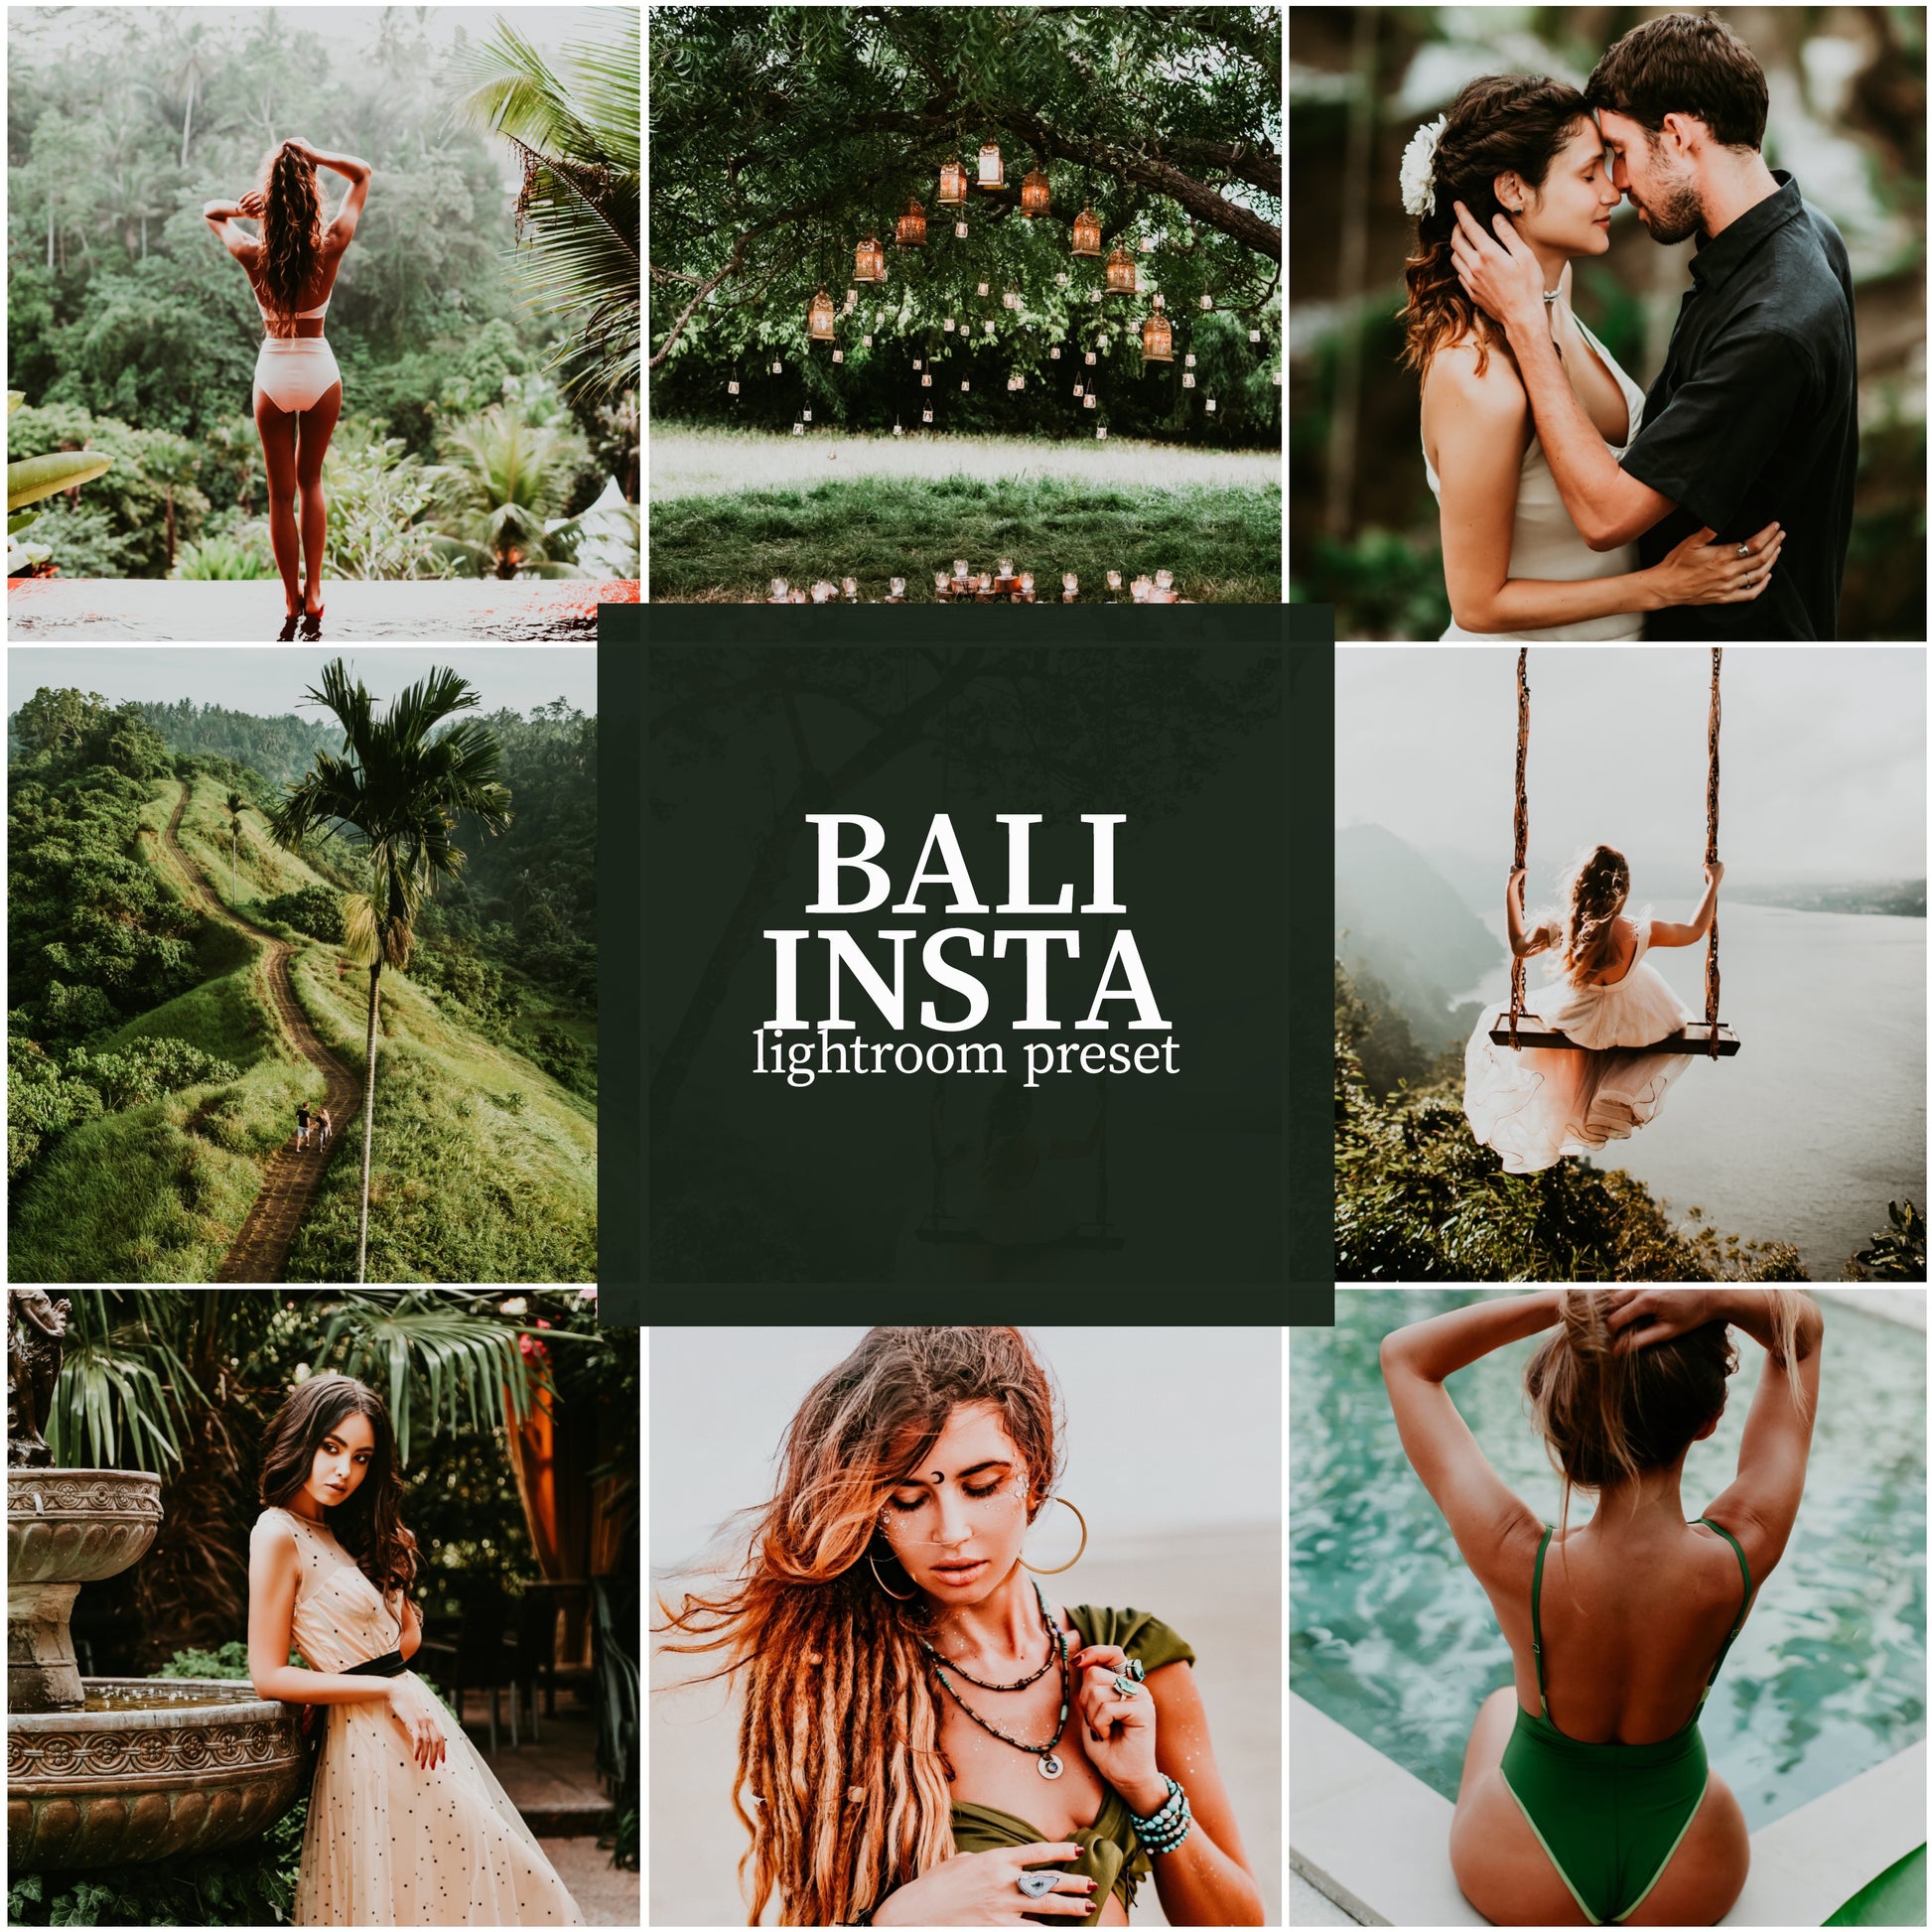 Bali Insta - Alicephotostudio